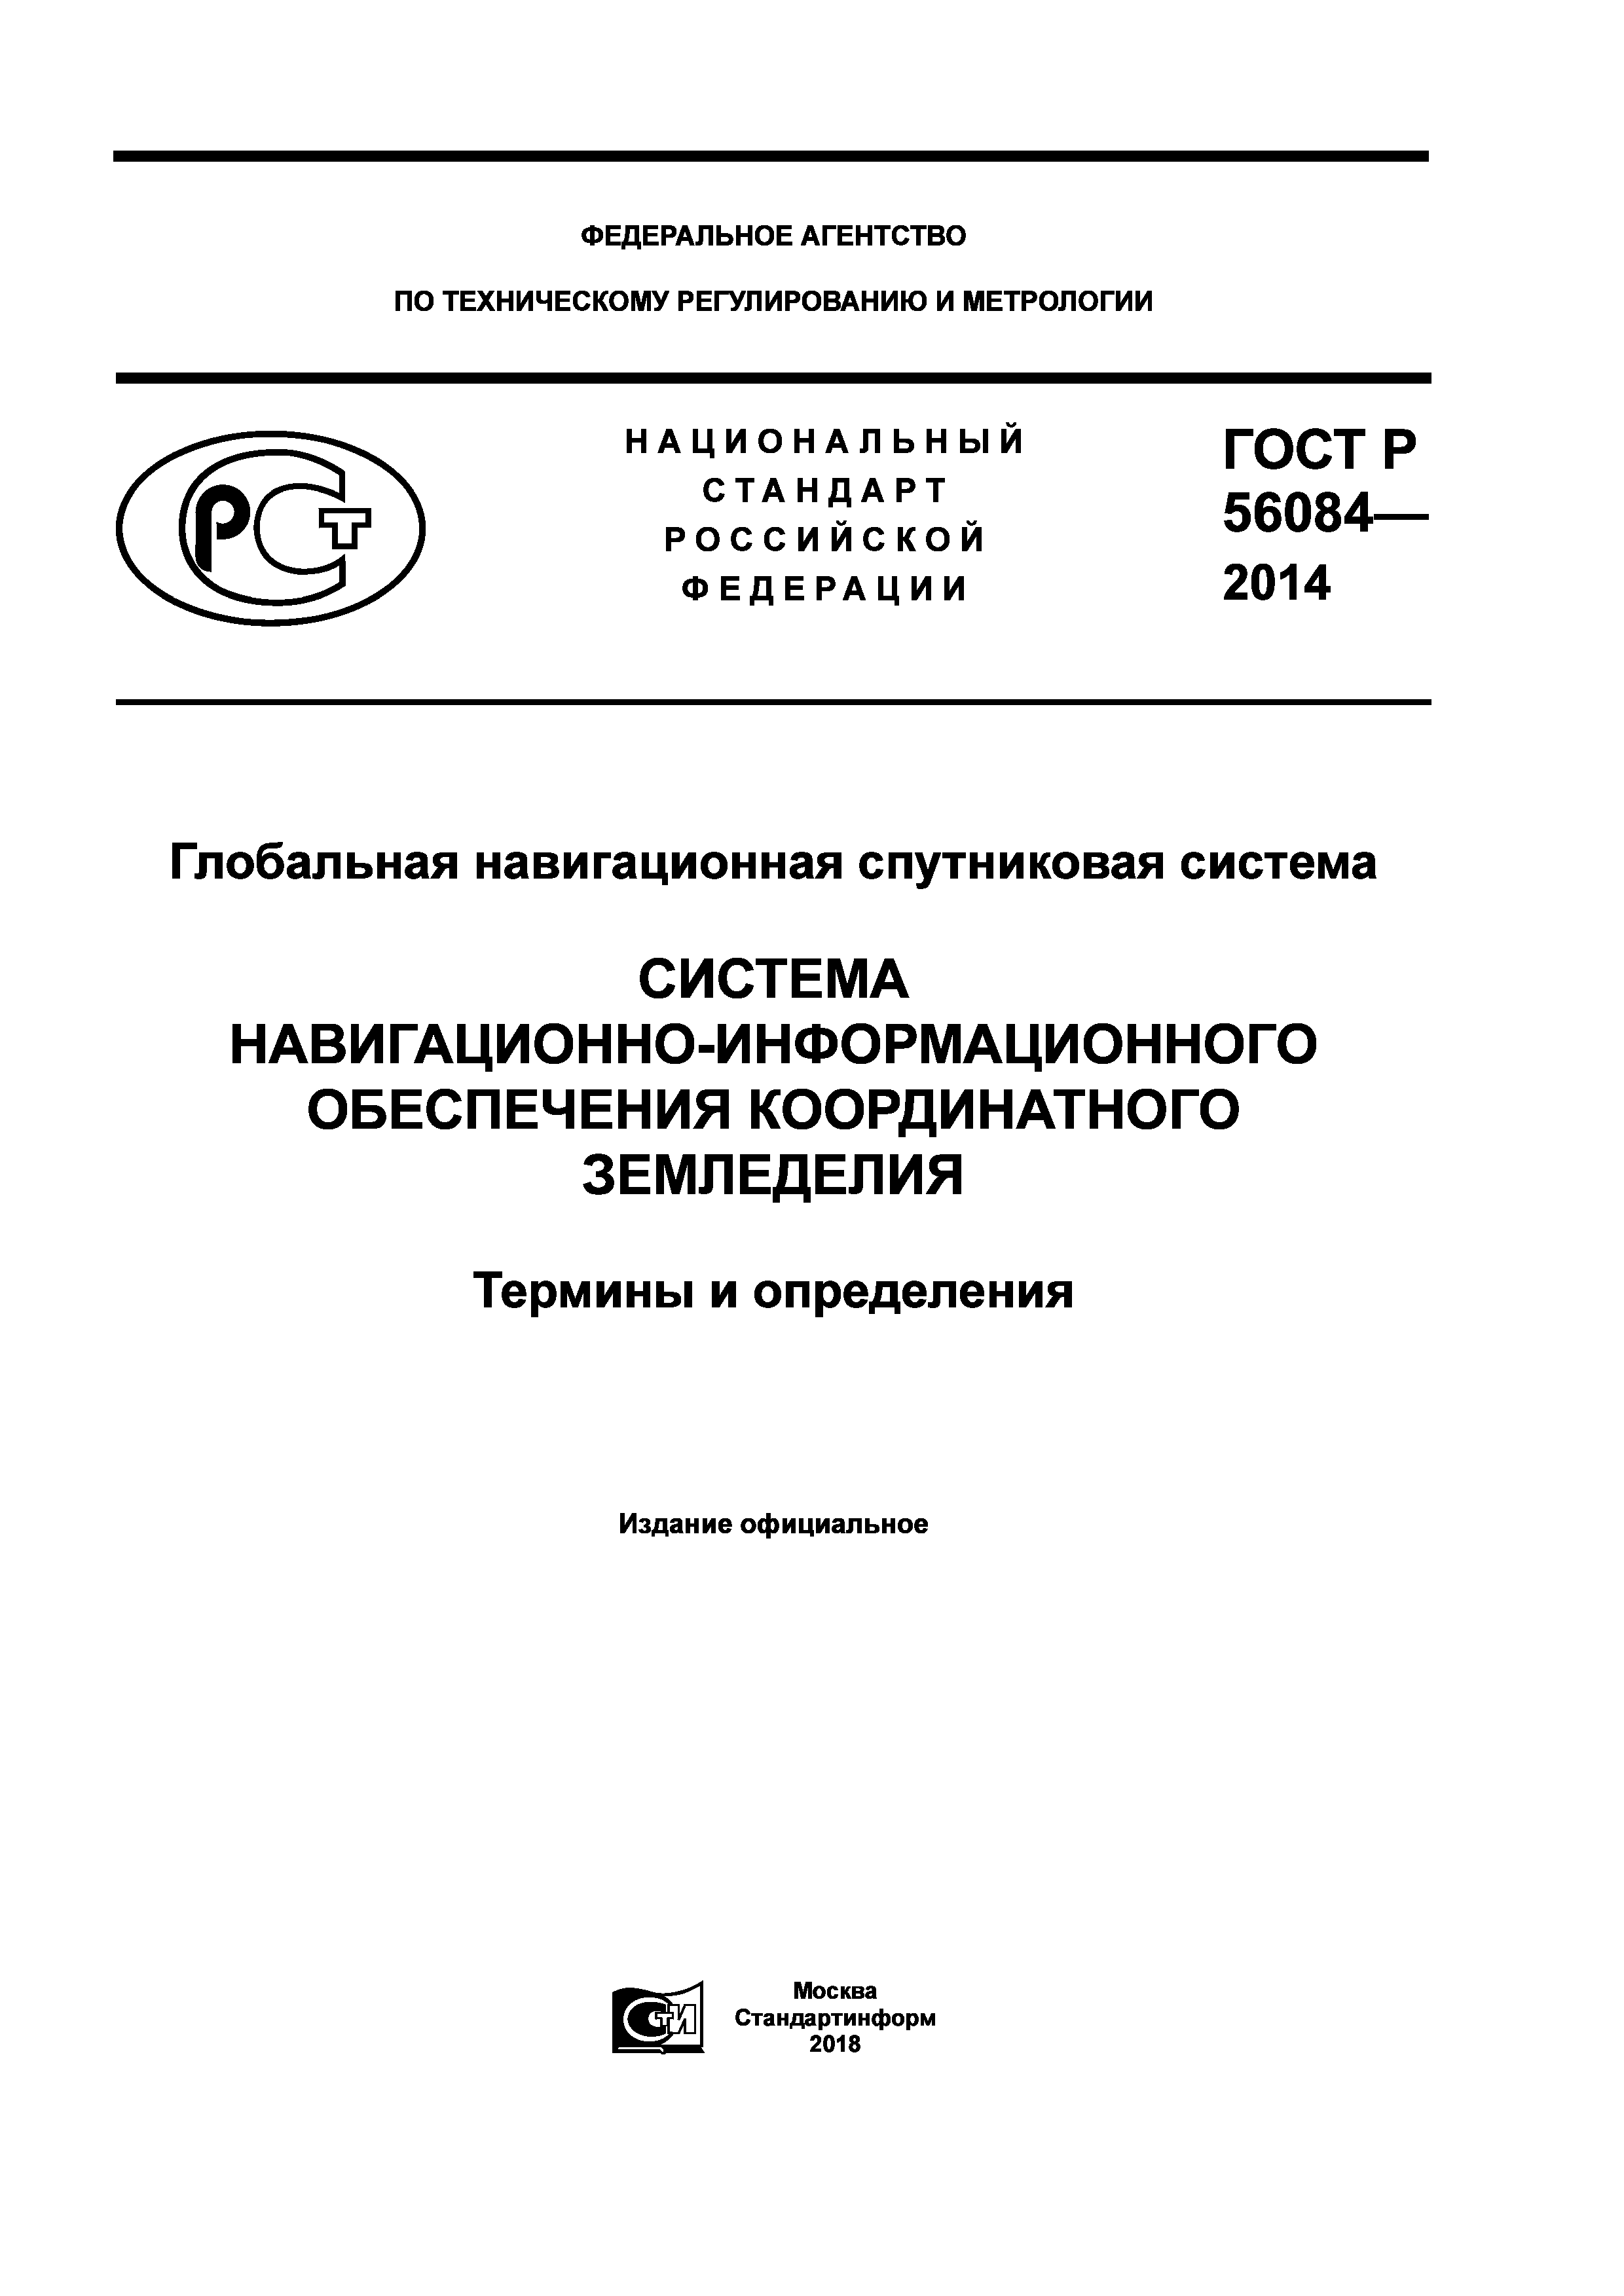 ГОСТ Р 56084-2014